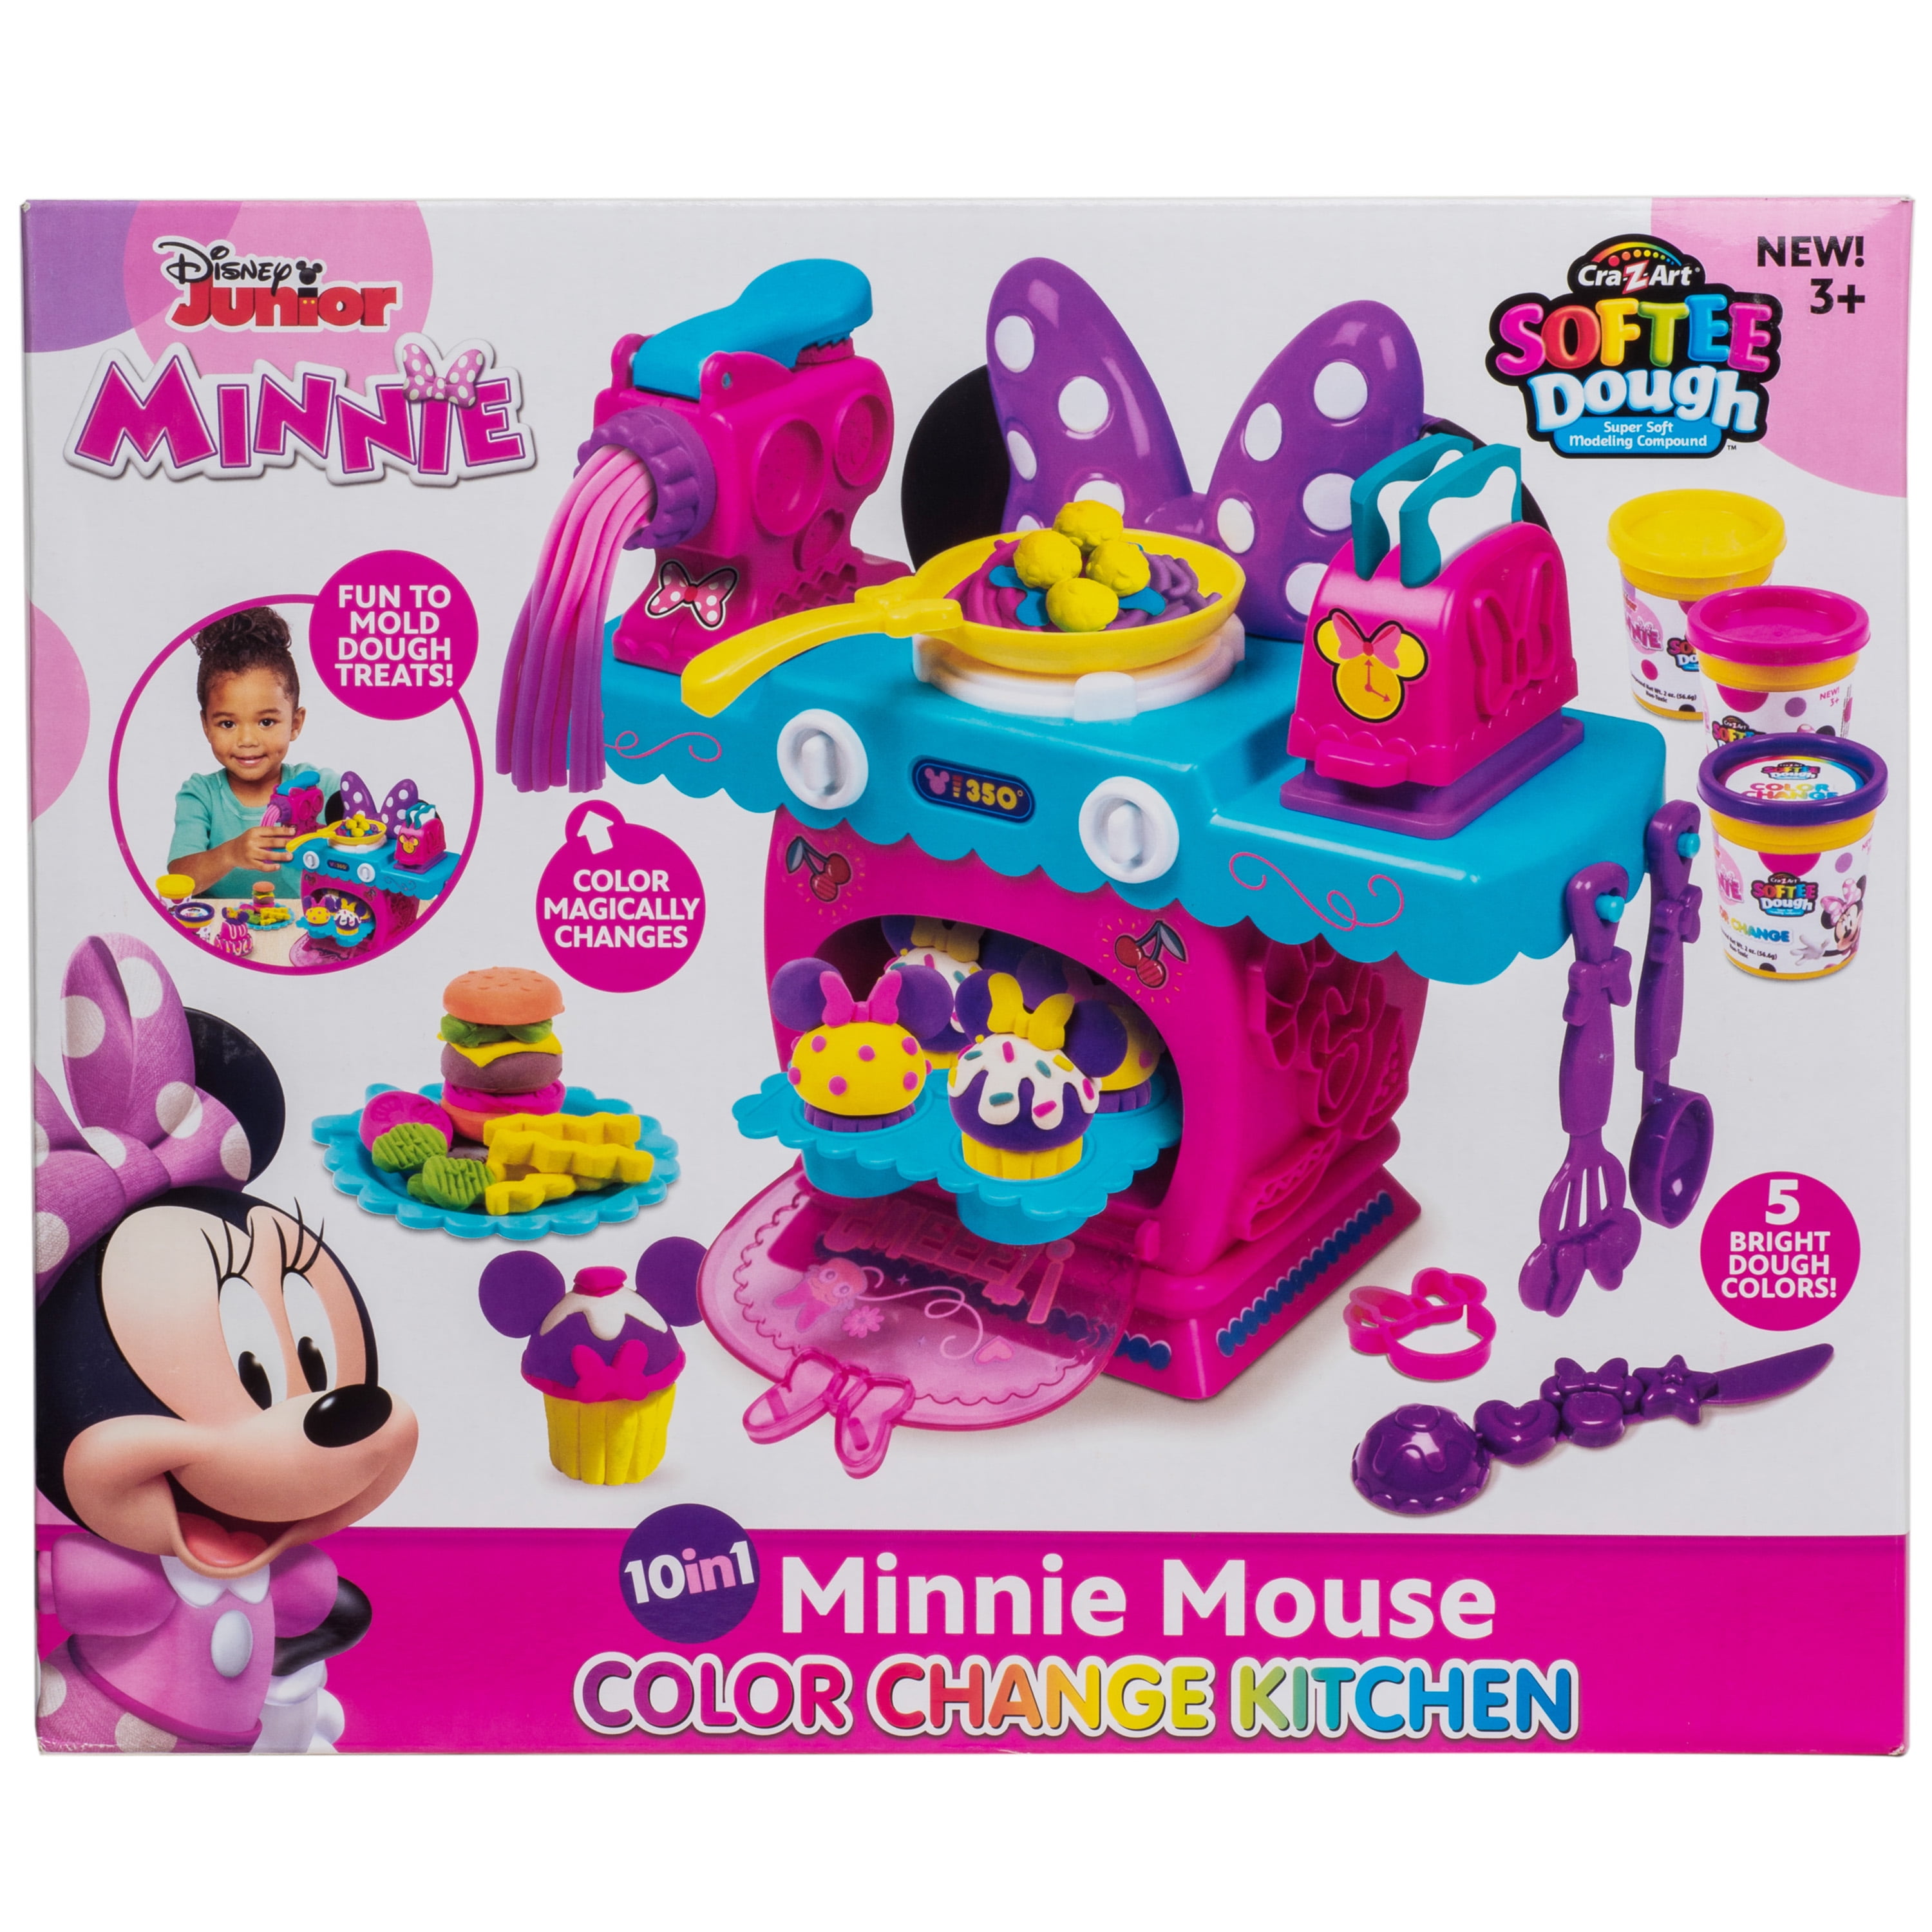 Buy Cra-Z-Art: Disney Minnie Mouse Ultimate Art Activities - 30 Fun Kids  Projects, Creative Activity Set, Children Ages 6+